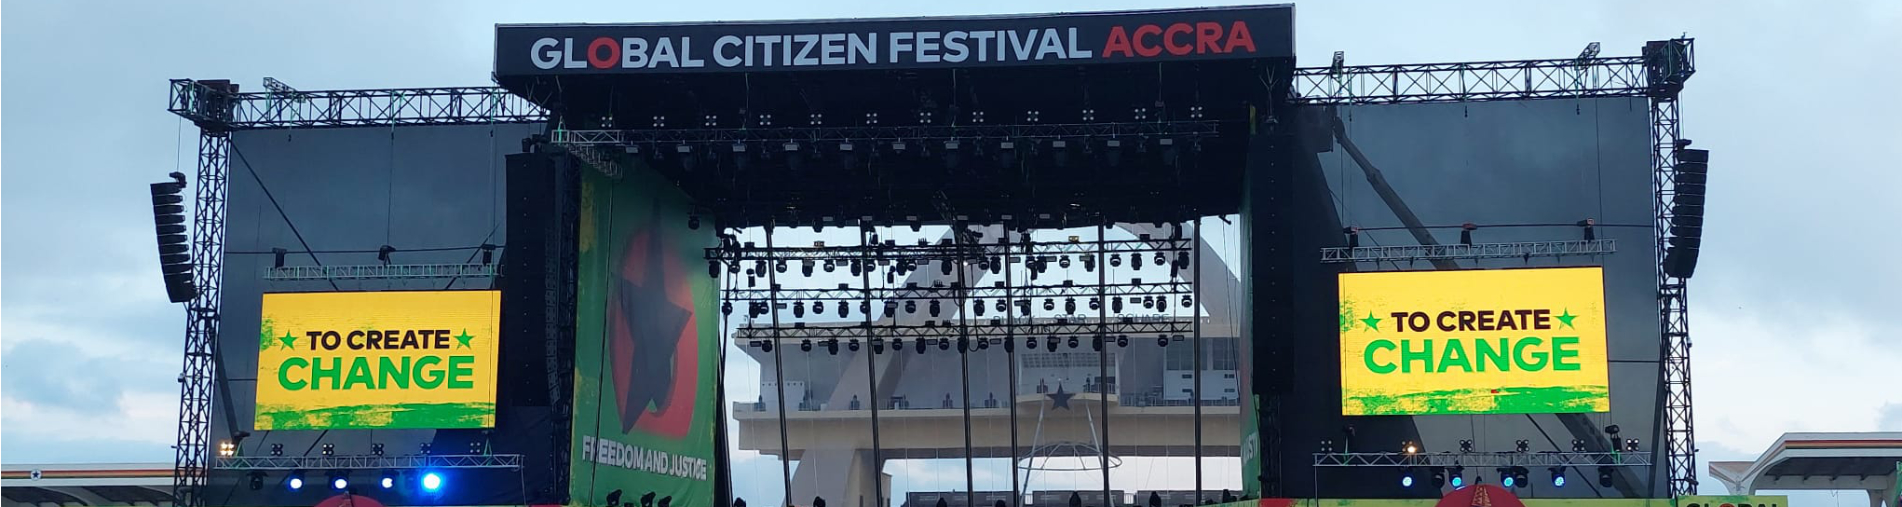 Global Citizen Festival, Acra